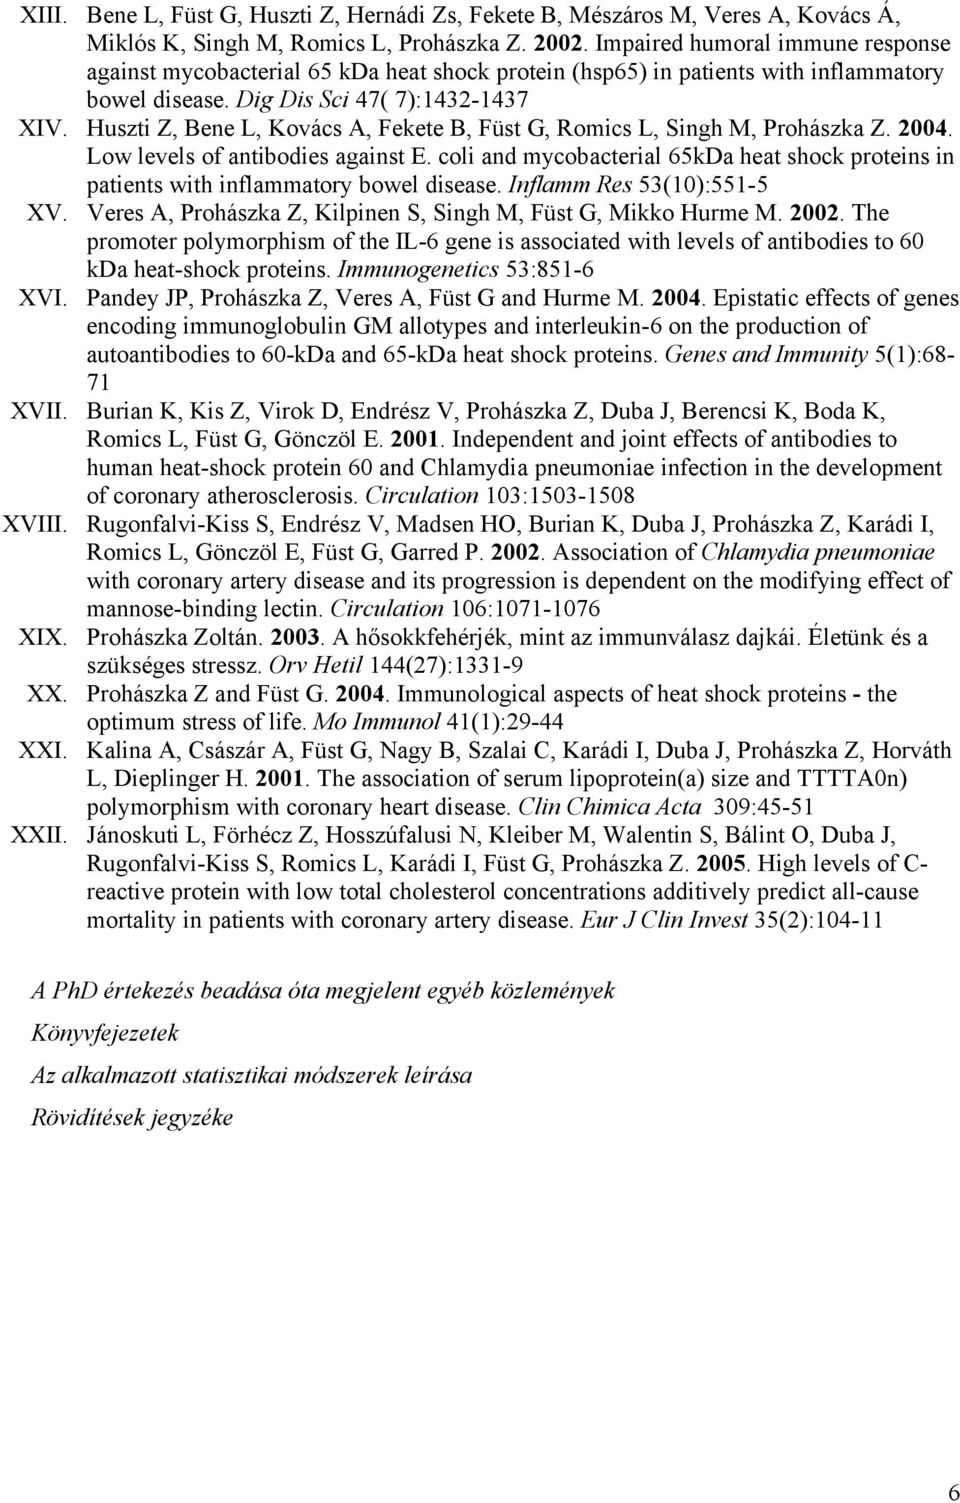 Huszti Z, Bene L, Kovács A, Fekete B, Füst G, Romics L, Singh M, Prohászka Z. 2004. Low levels of antibodies against E.